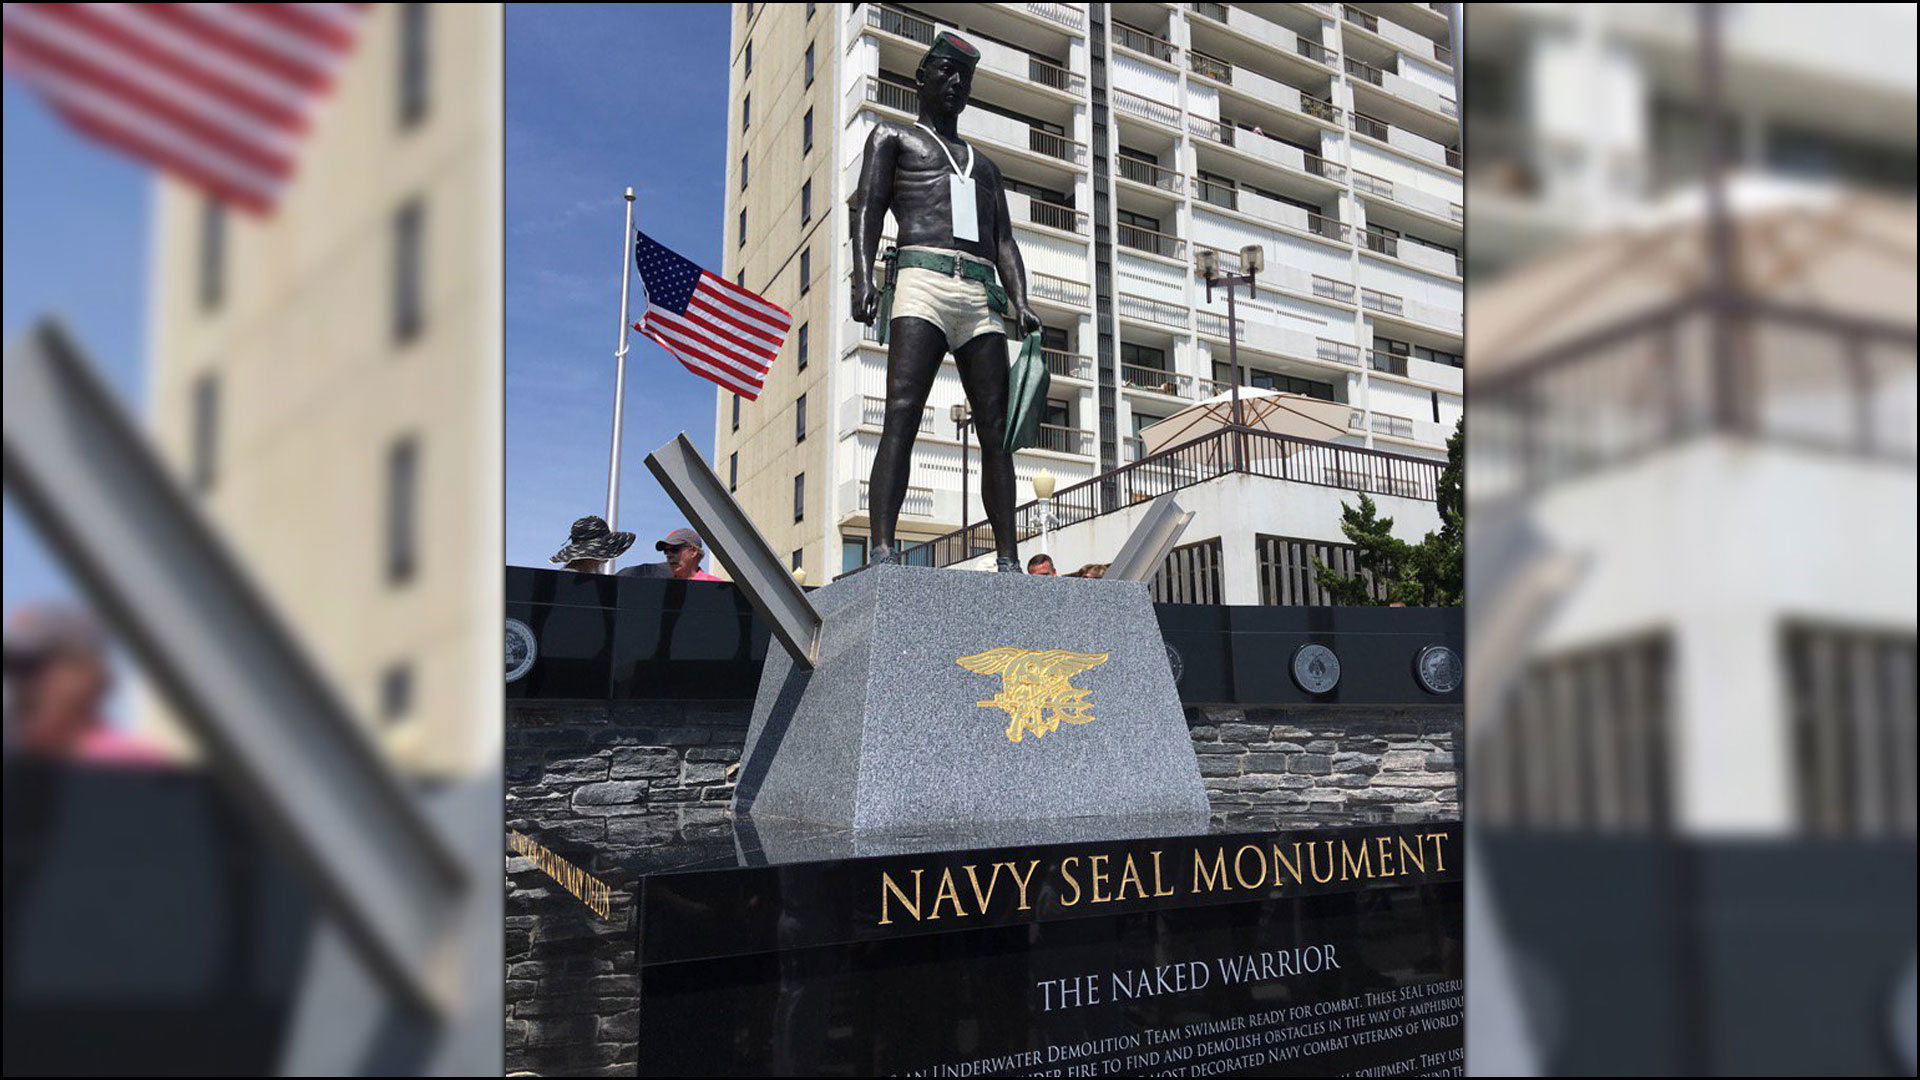 Navy SEAL monument dedicated in Virginia Beach